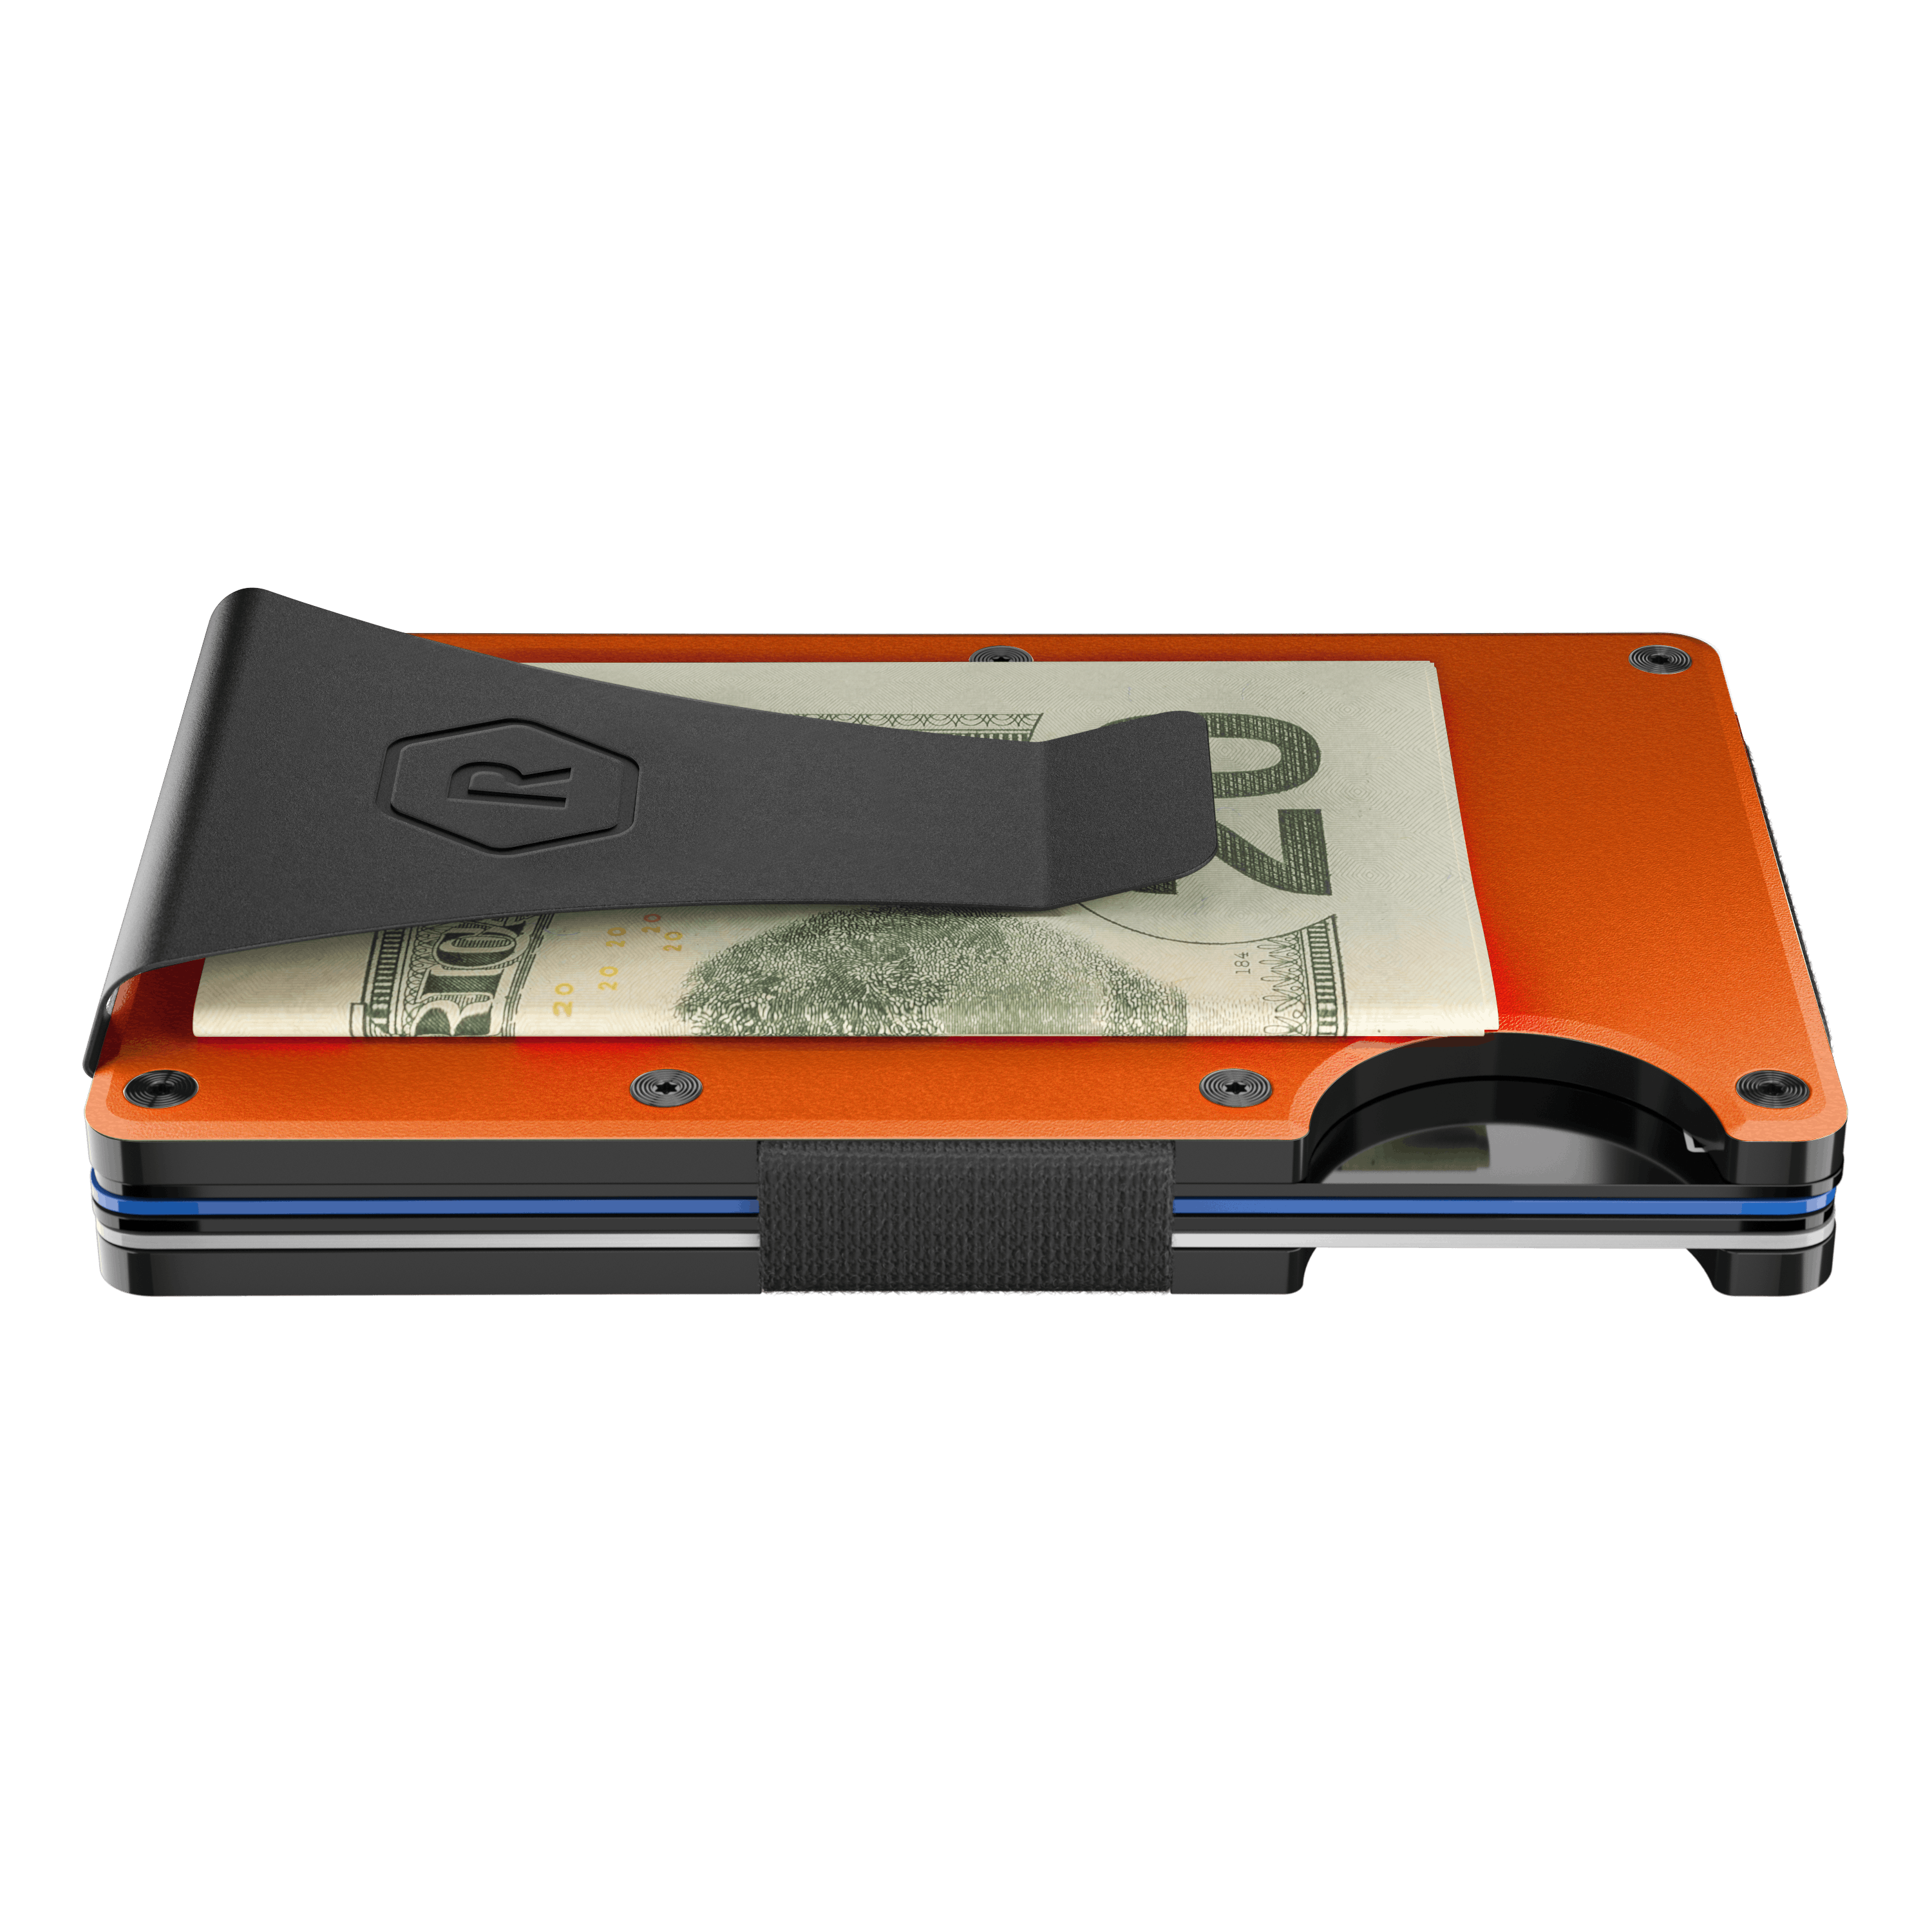 The Ridge Wallet - Aluminum: Cash Strap - Basecamp Orange #516